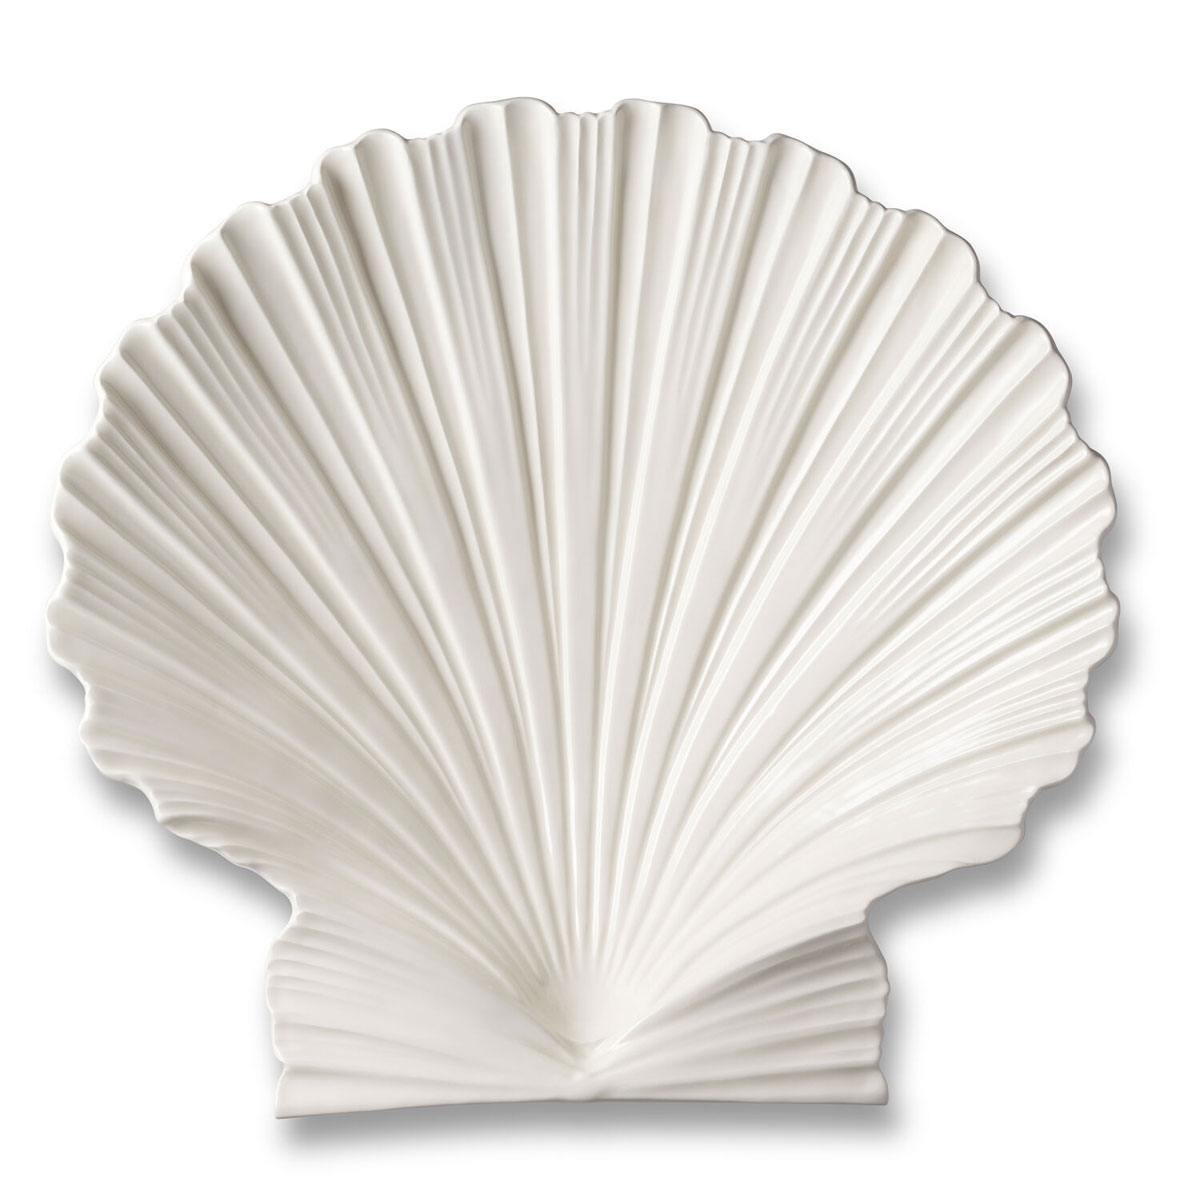 Aerin Shell Serving Platter, Large, Cream